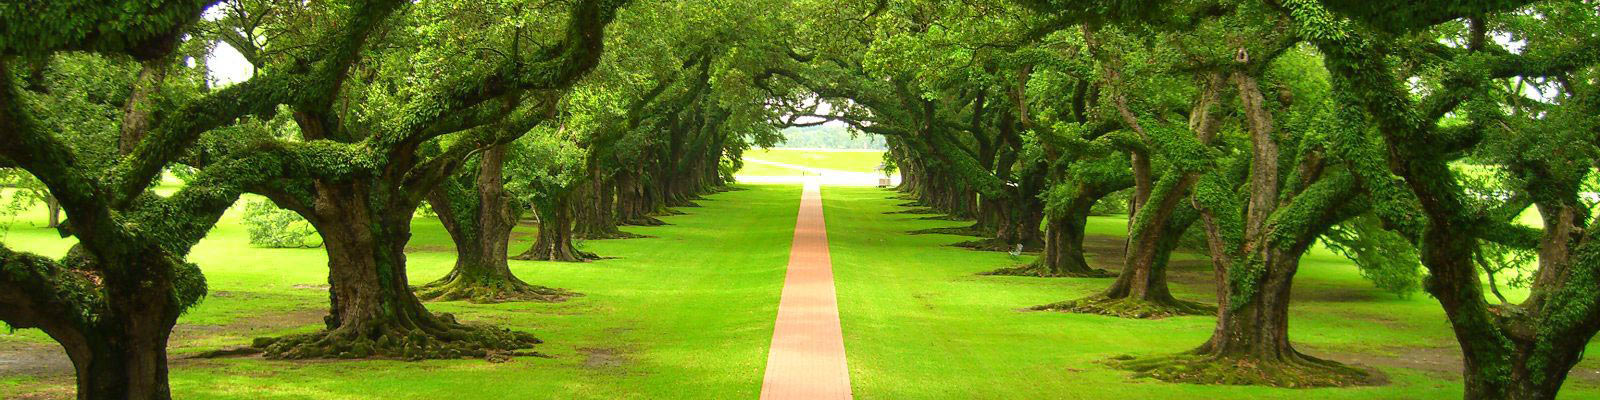 Path into Trees